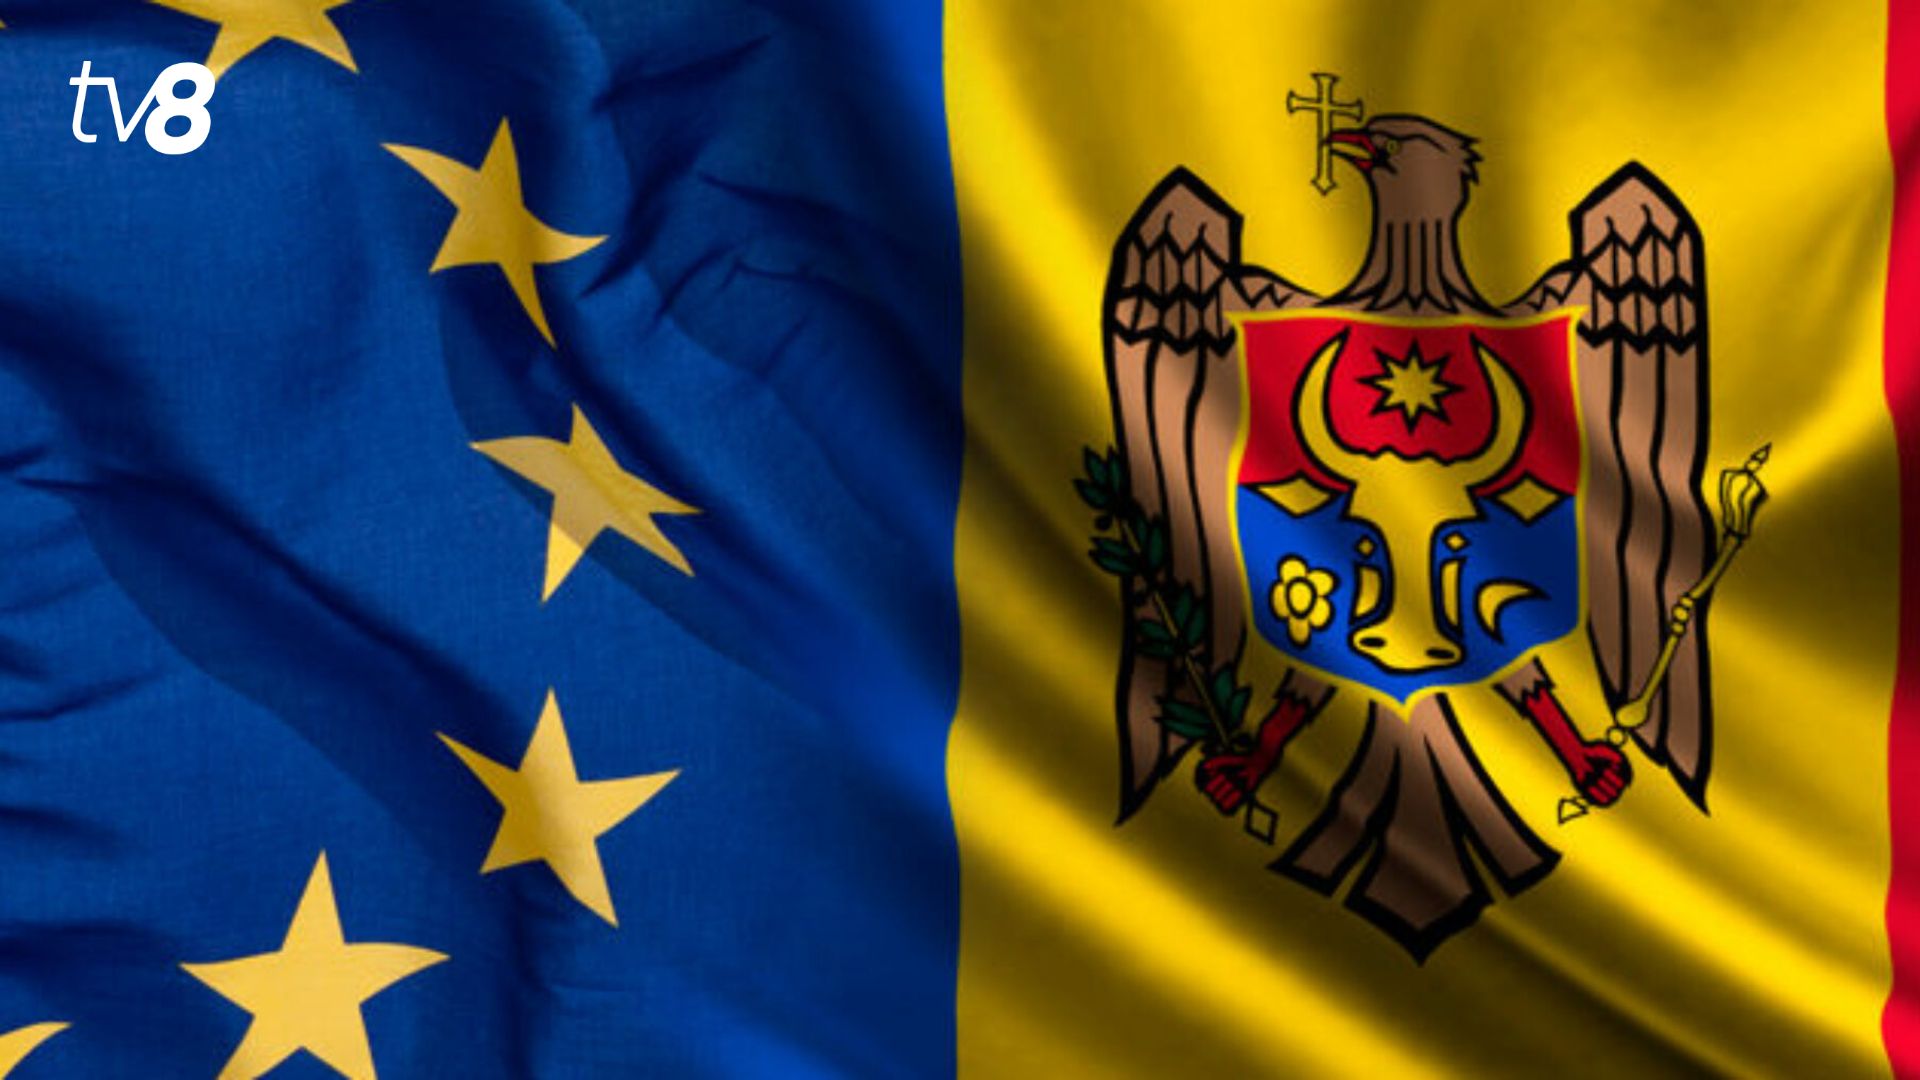 Republica moldova. Молдова и ЕС. Молдова ЕС флаги. Молдова Европа. Молдавия и Европейский Союз.